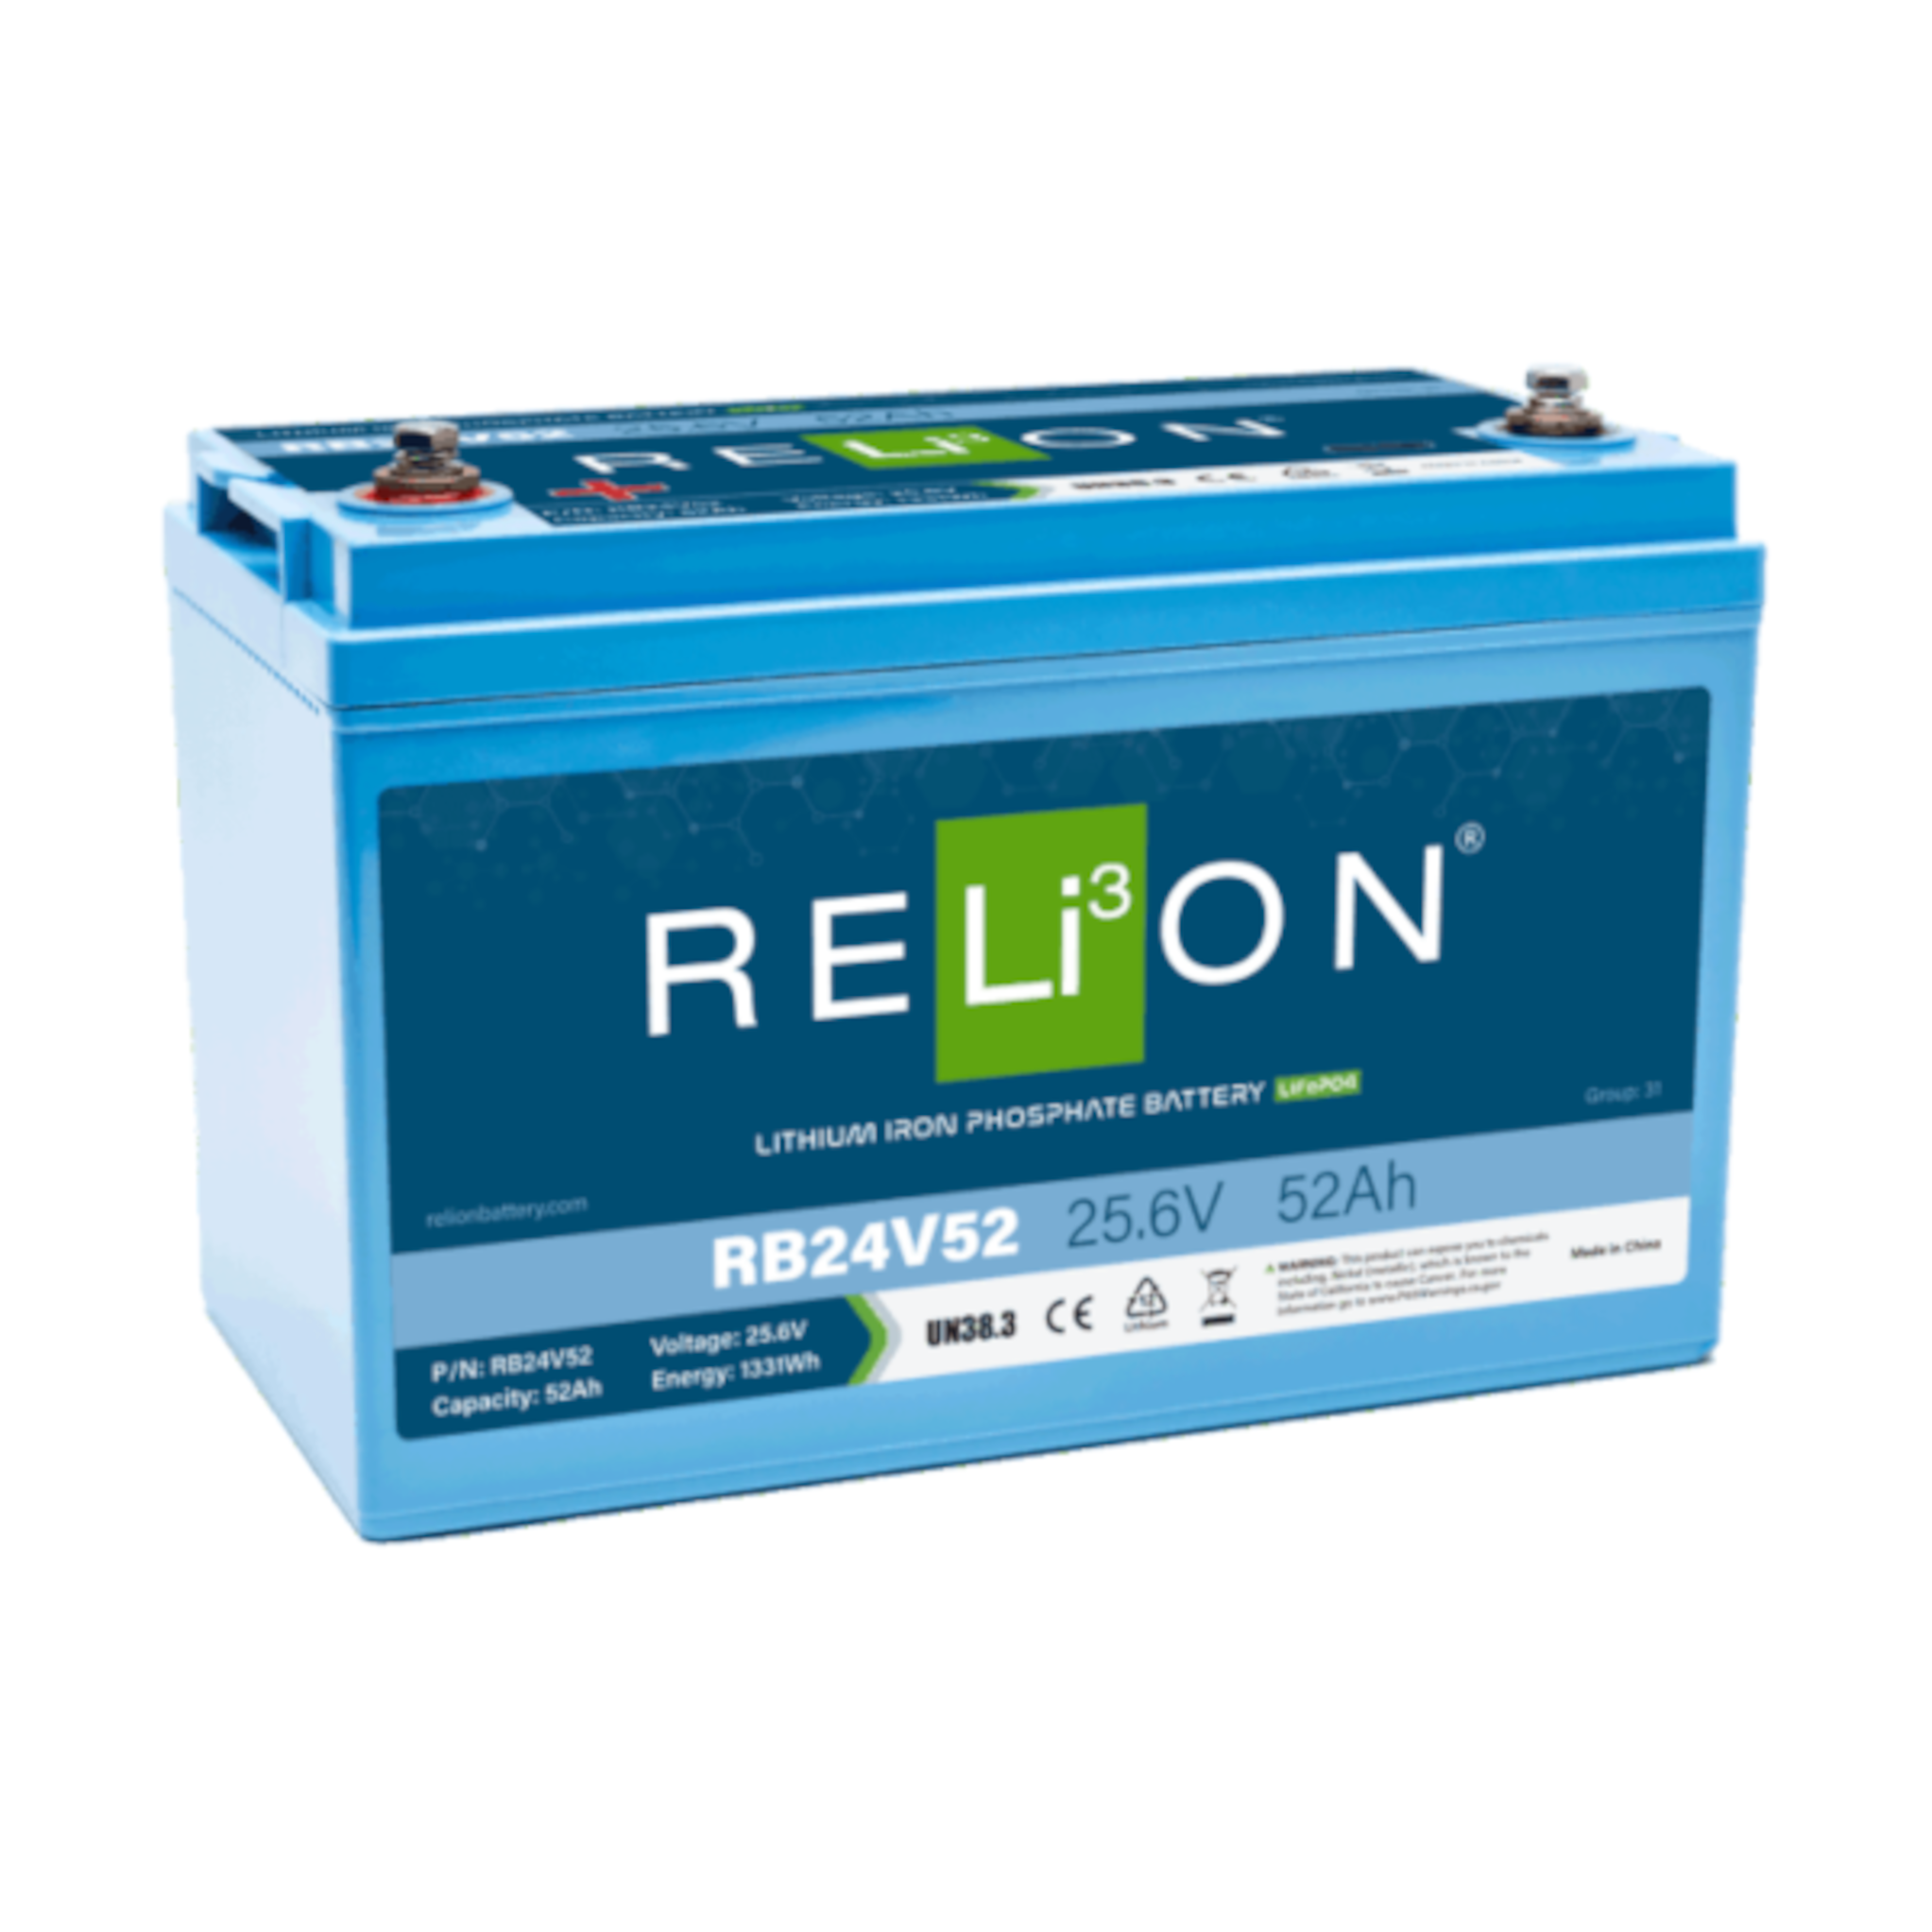 Relion RB24V50 24V LiFePO4 Lithium Deep Cycle Battery